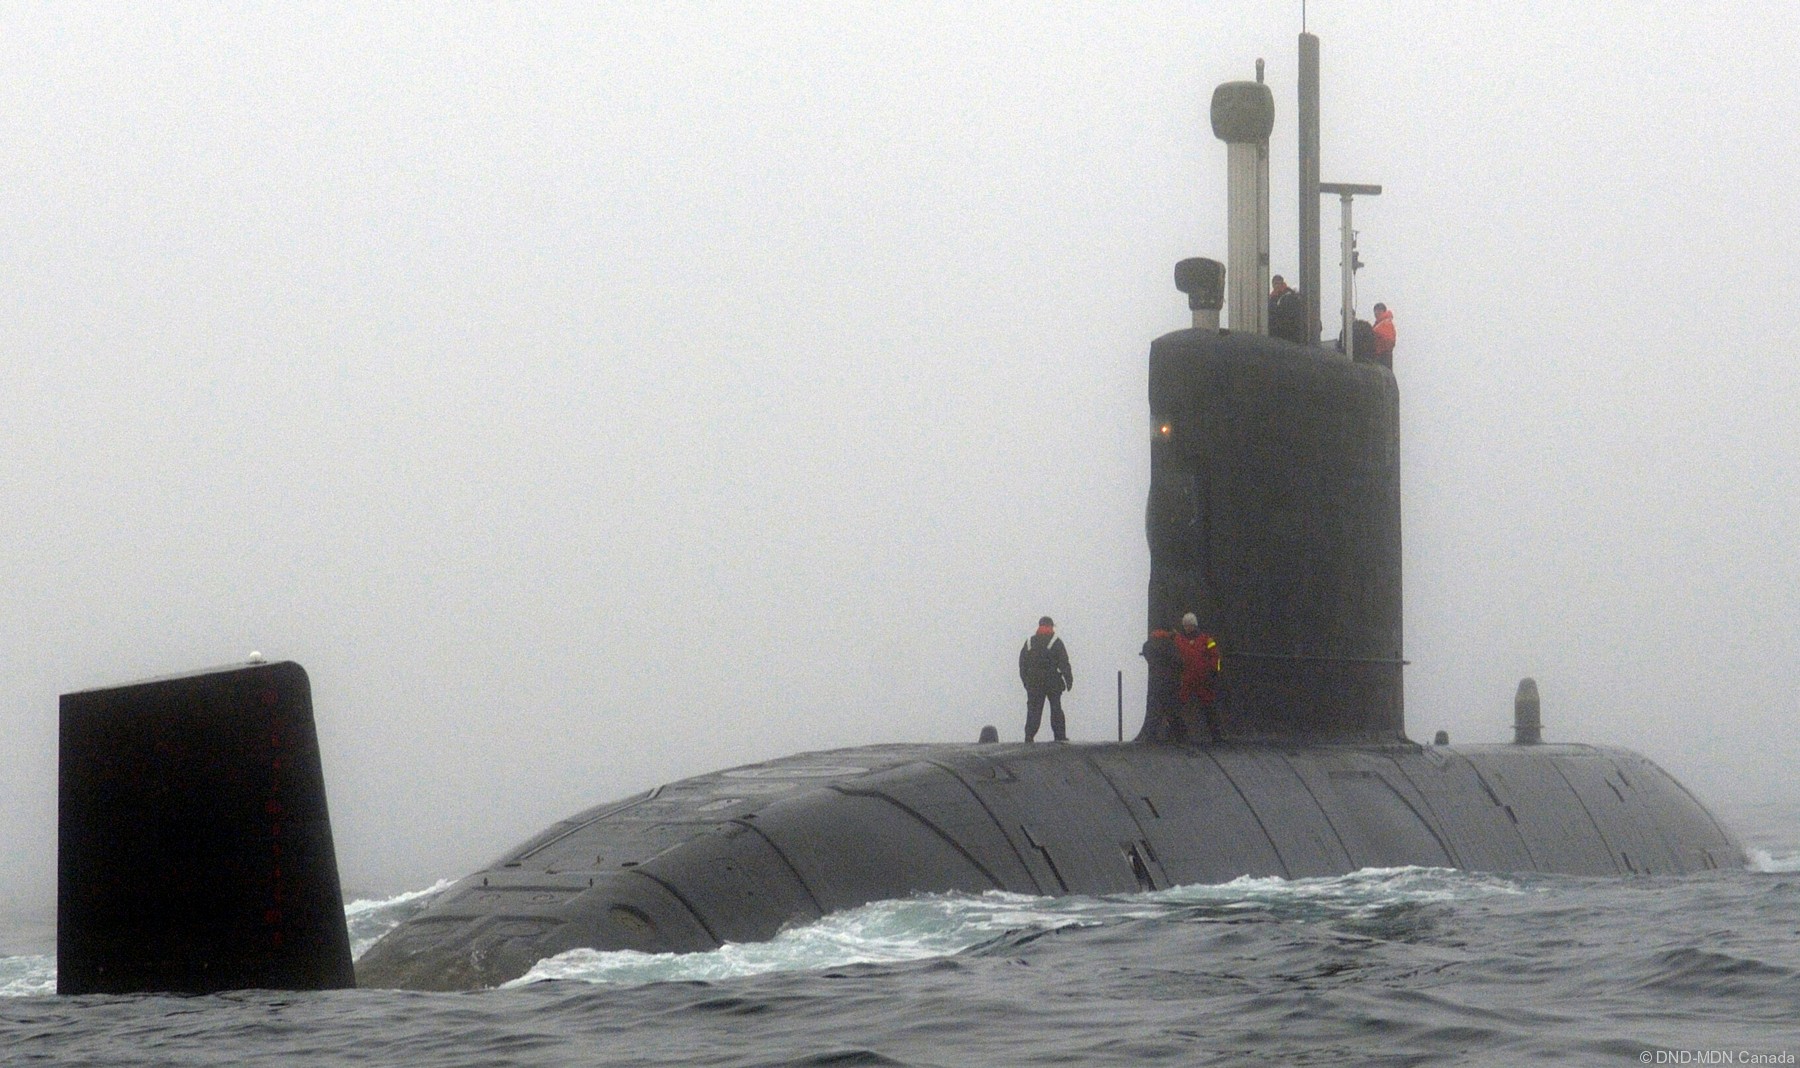 ssk-878 hmcs corner brook victoria upholder class patrol submarine ncsm royal canadian navy 17